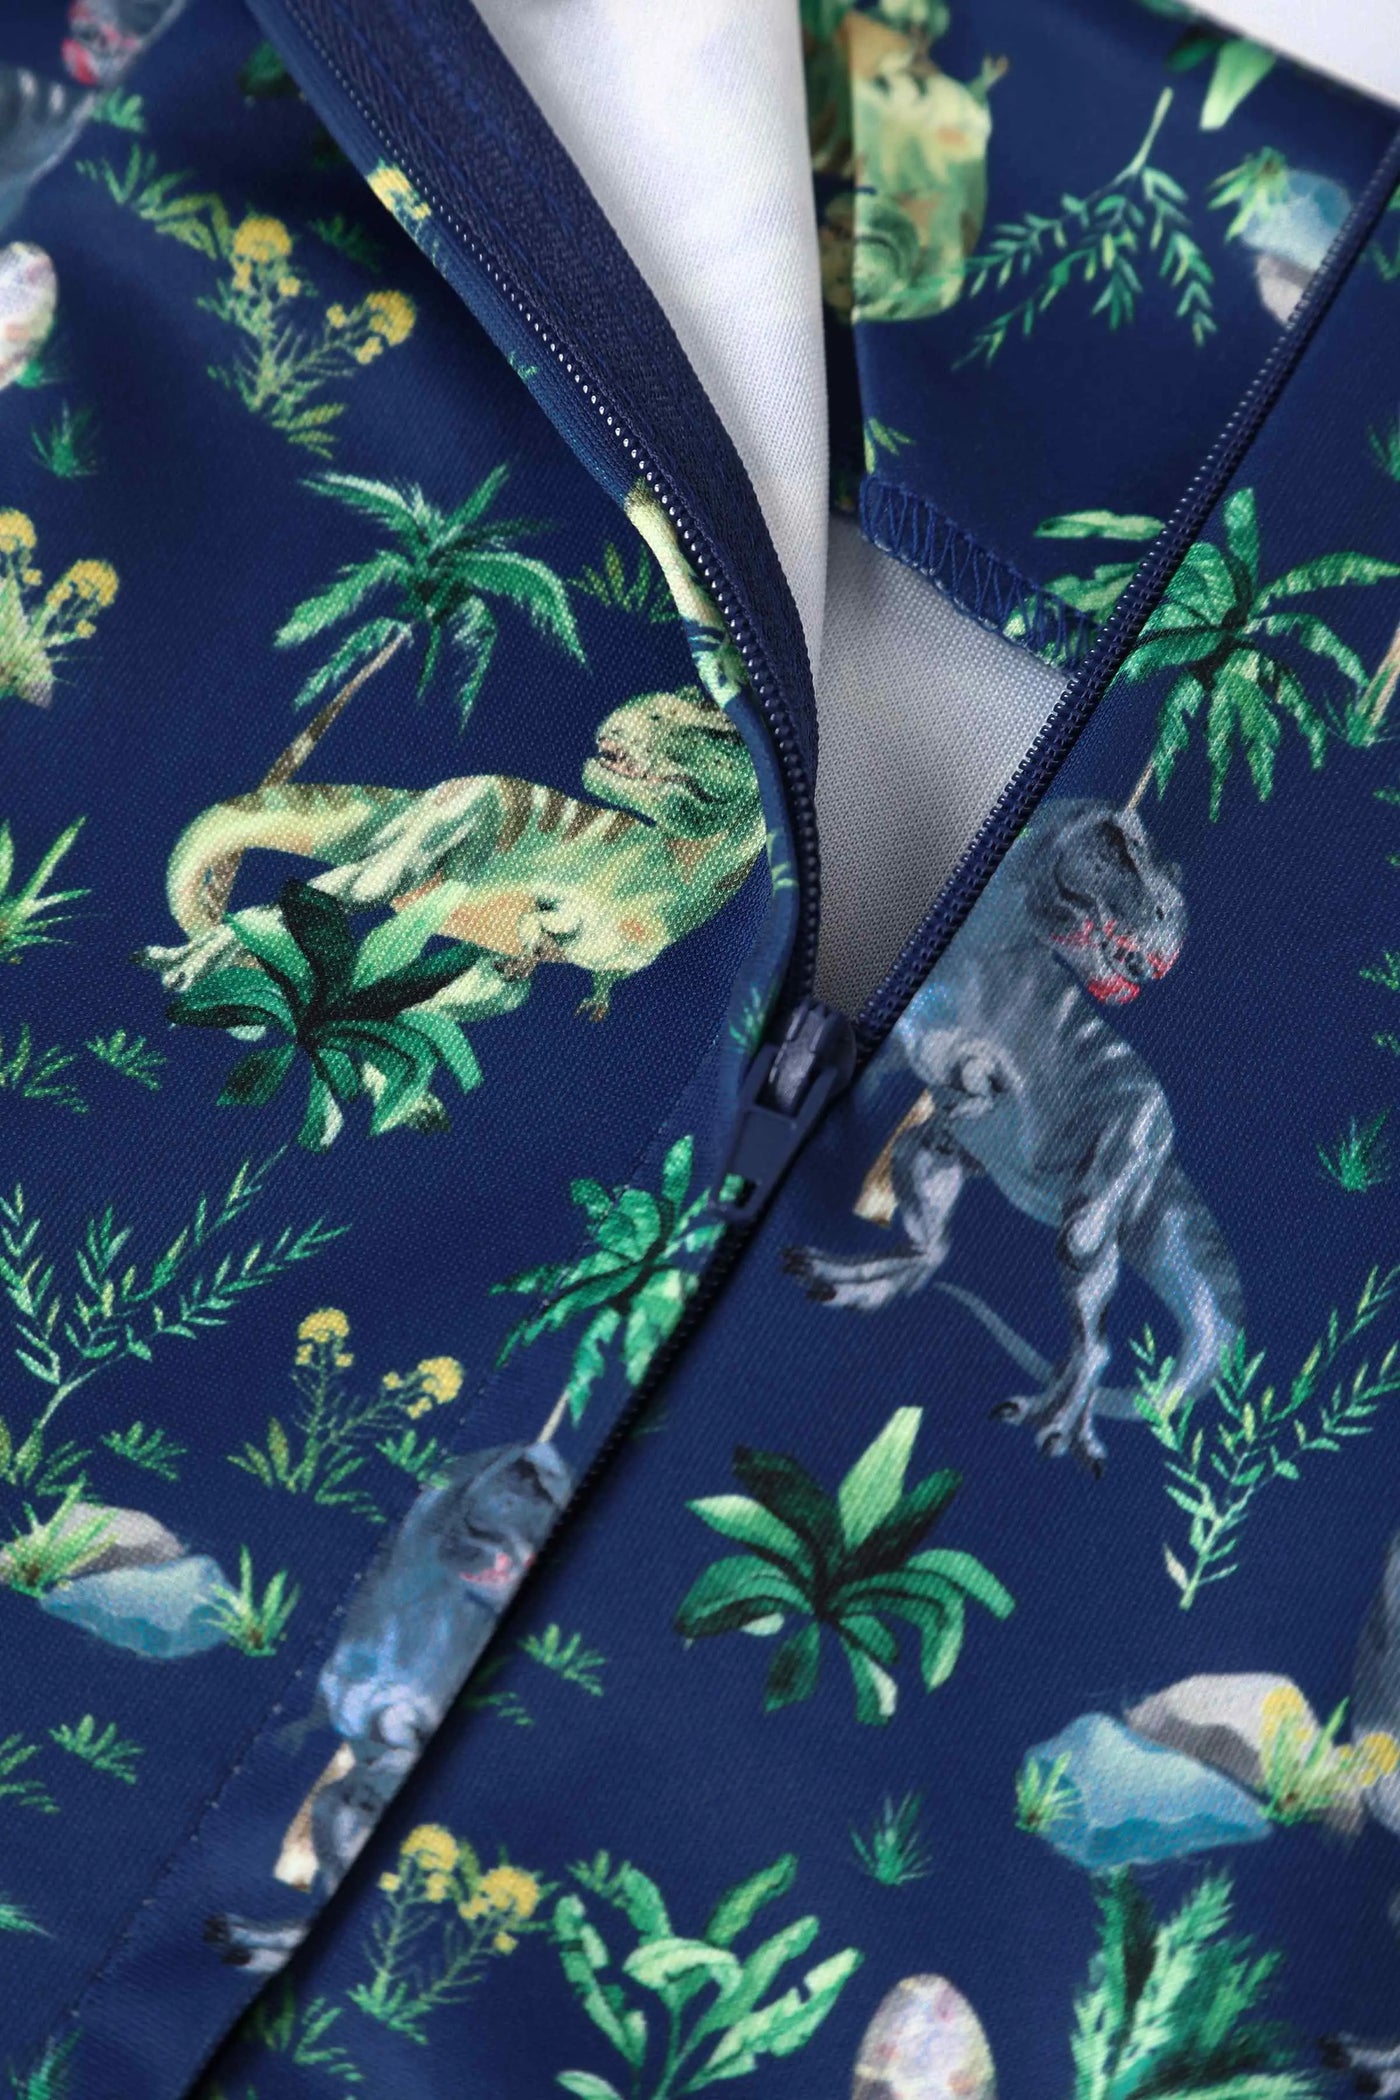 T-rex dinosaur print dress in navy blue zip close up